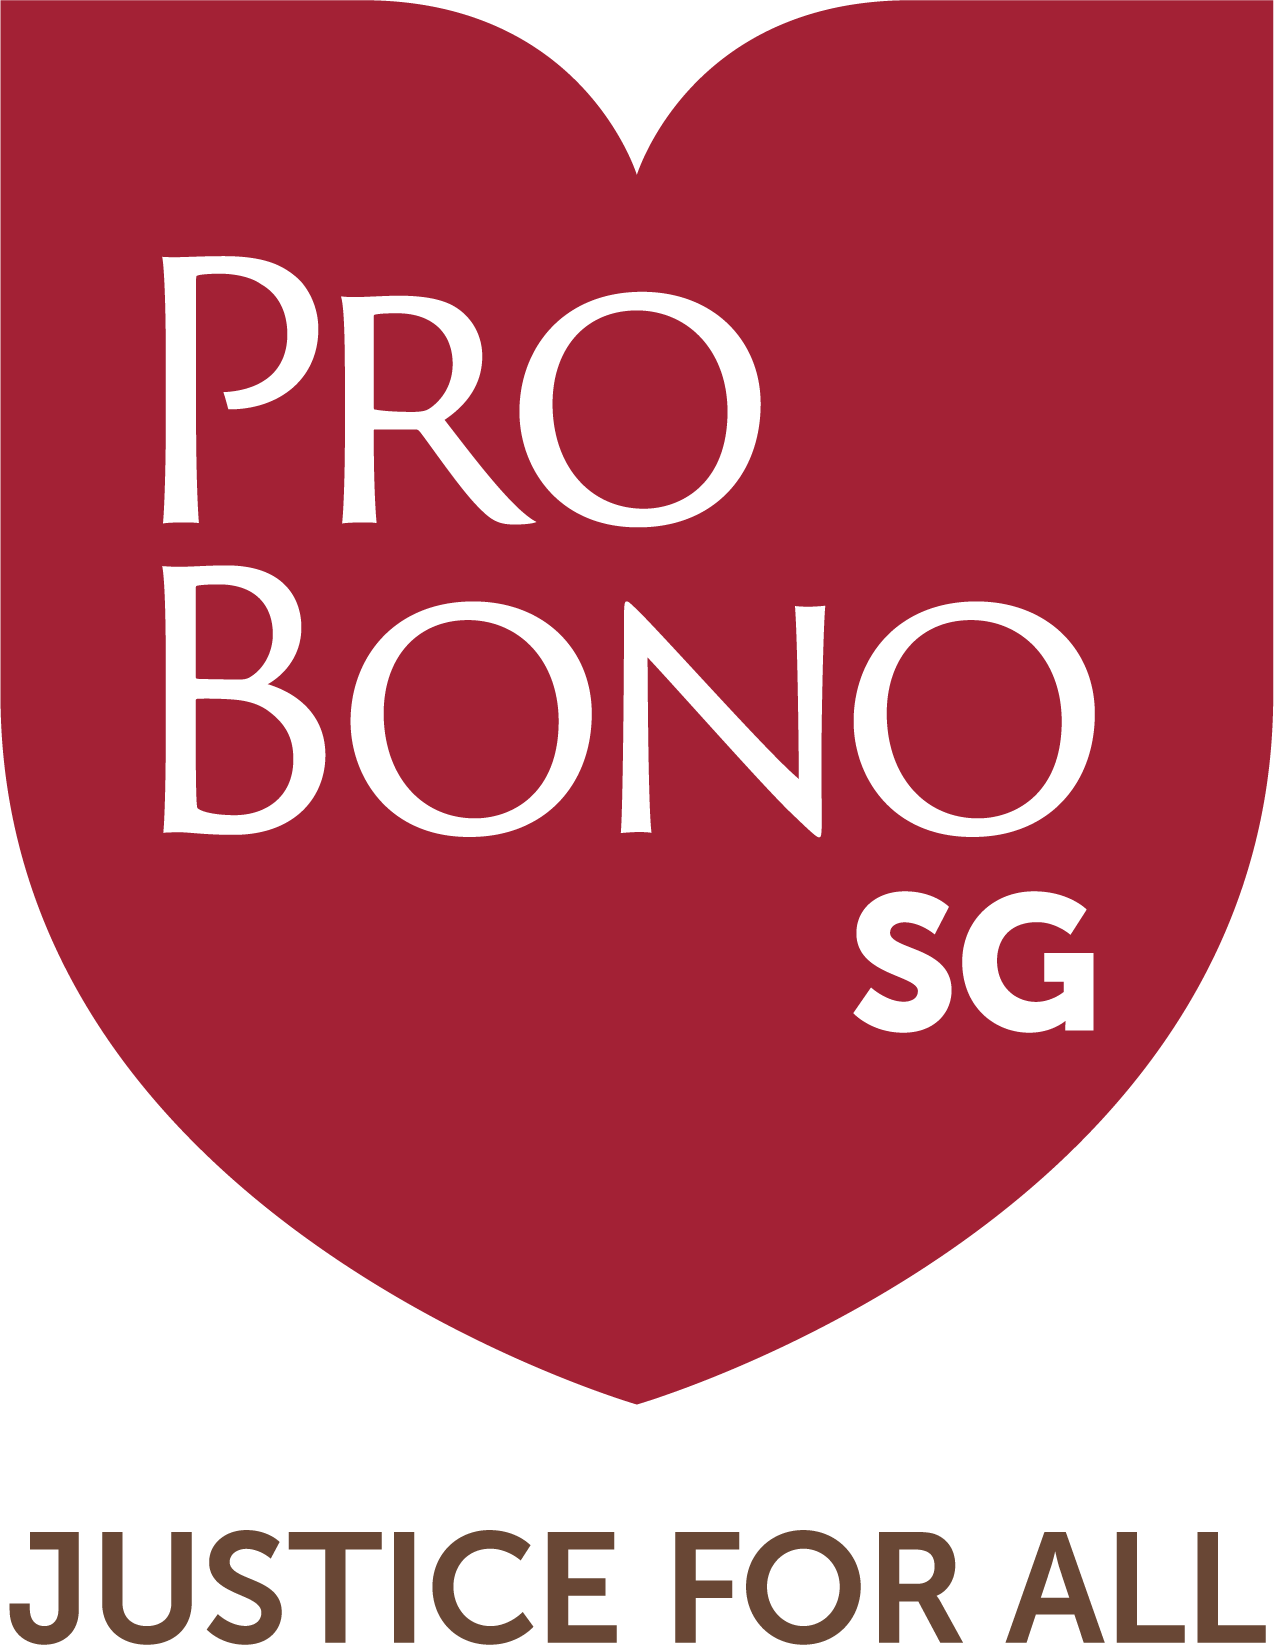 Pro Bono SG